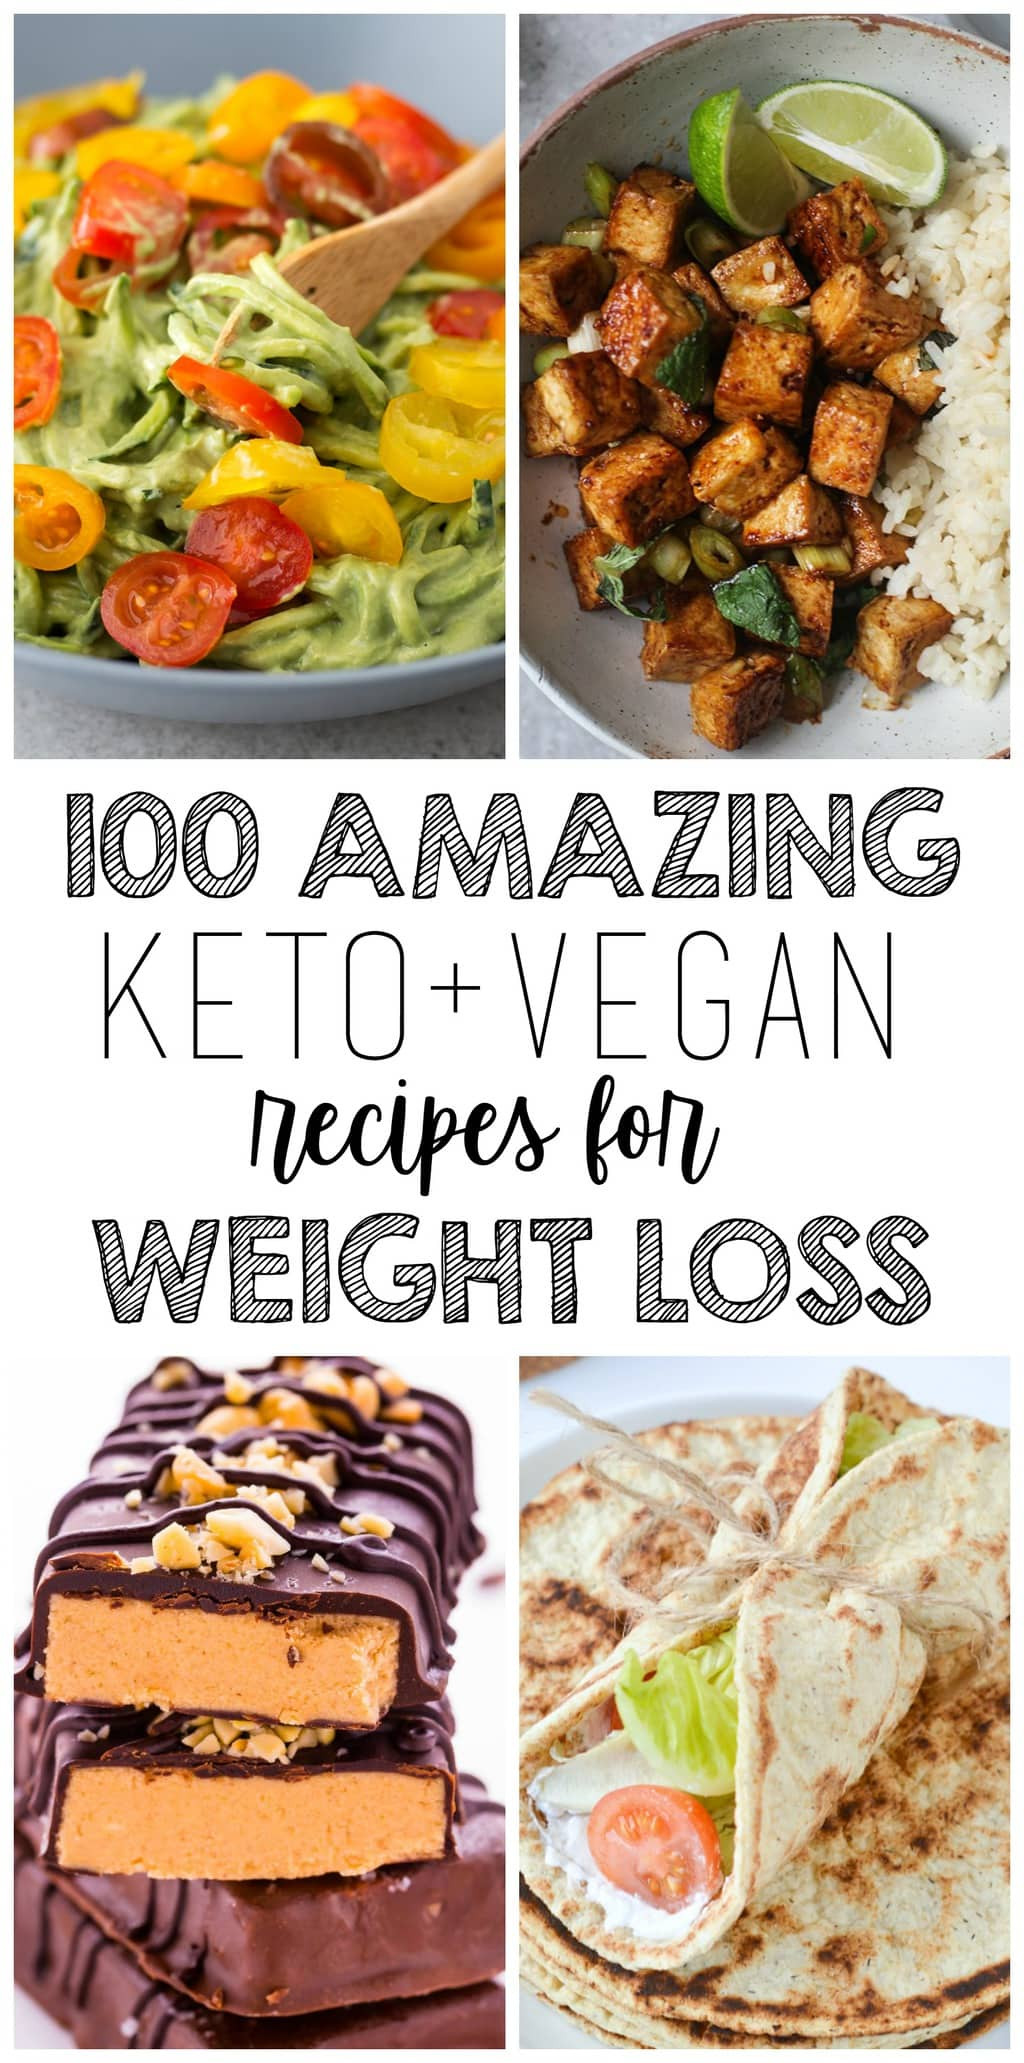 Vegetarian Keto Recipes Protein
 100 AMAZING Keto Vegan Recipes For Weight Loss